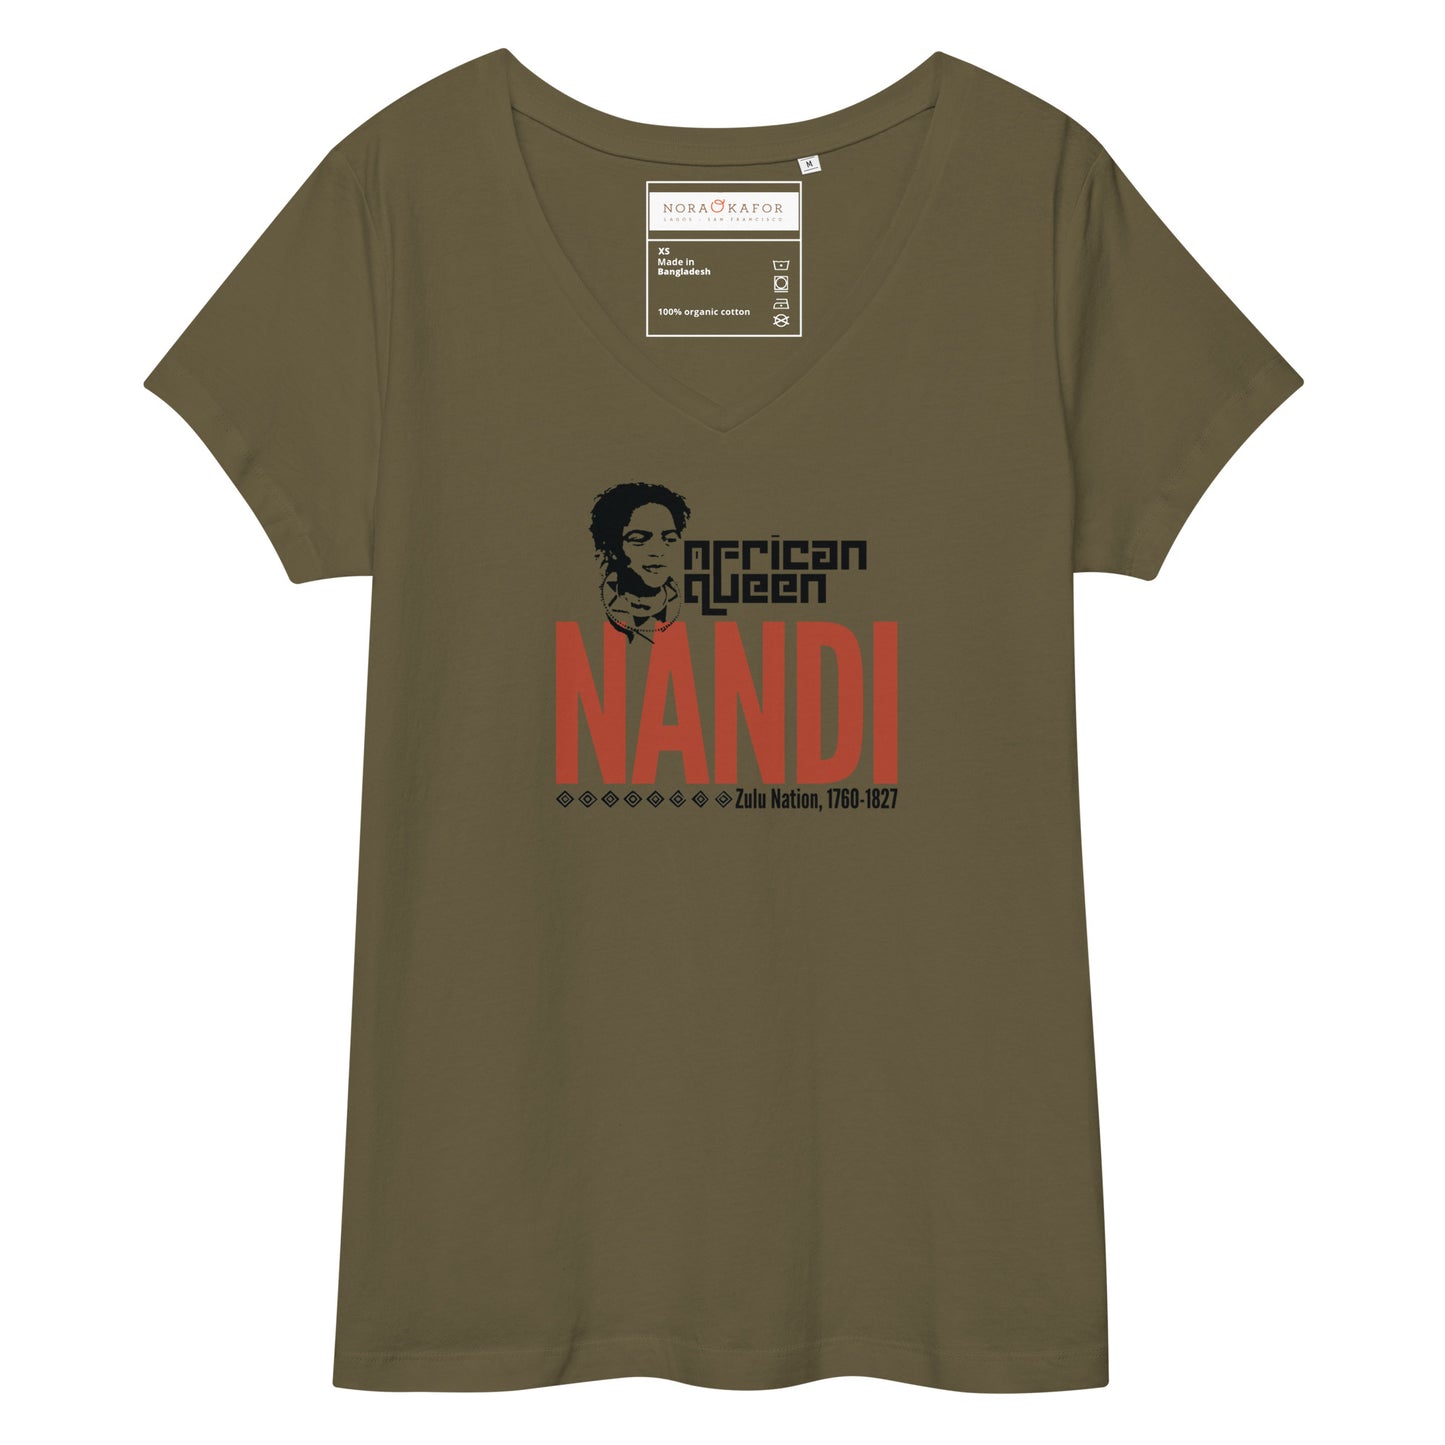 Queen Nandi Women’s fitted v-neck t-shirt